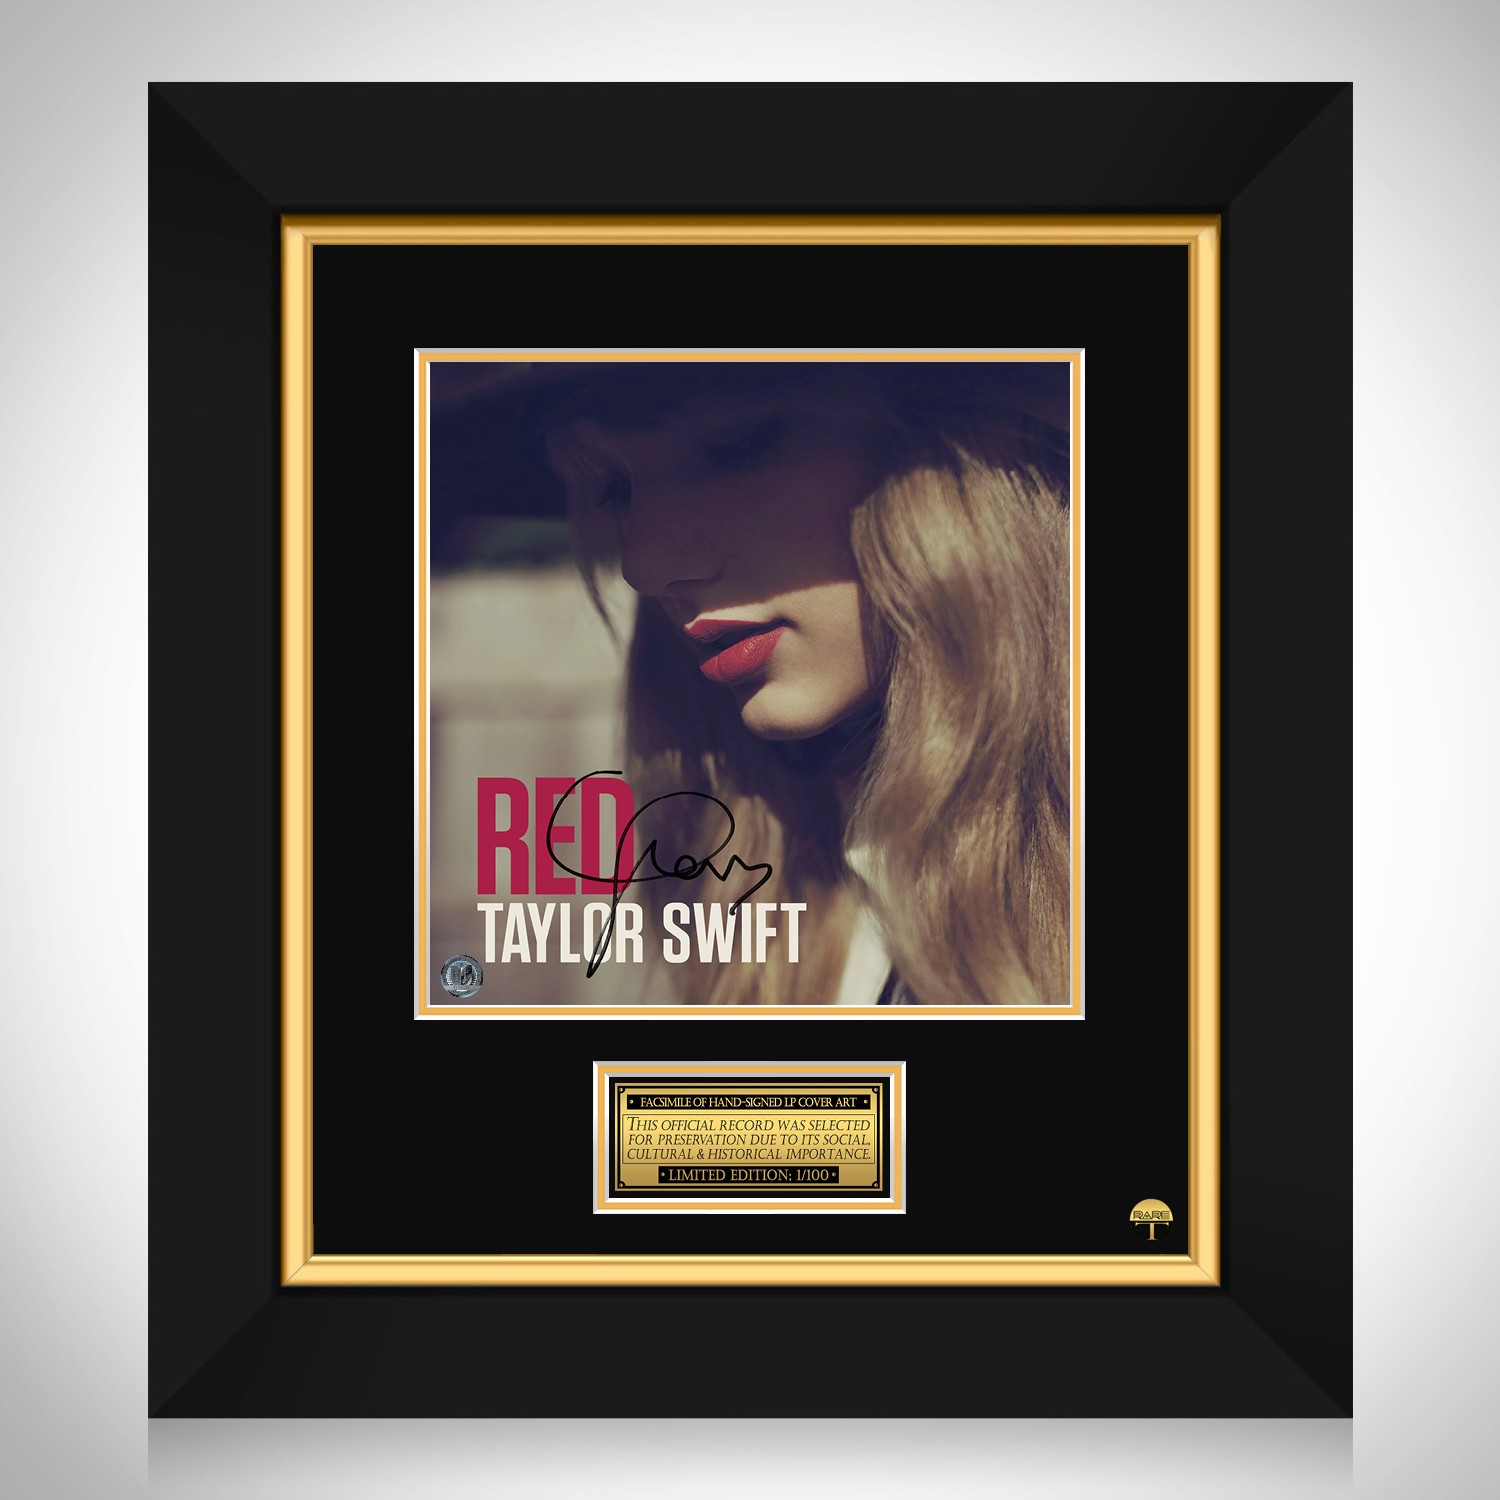 Taylor Swift - Red (2xLP Vinyl)